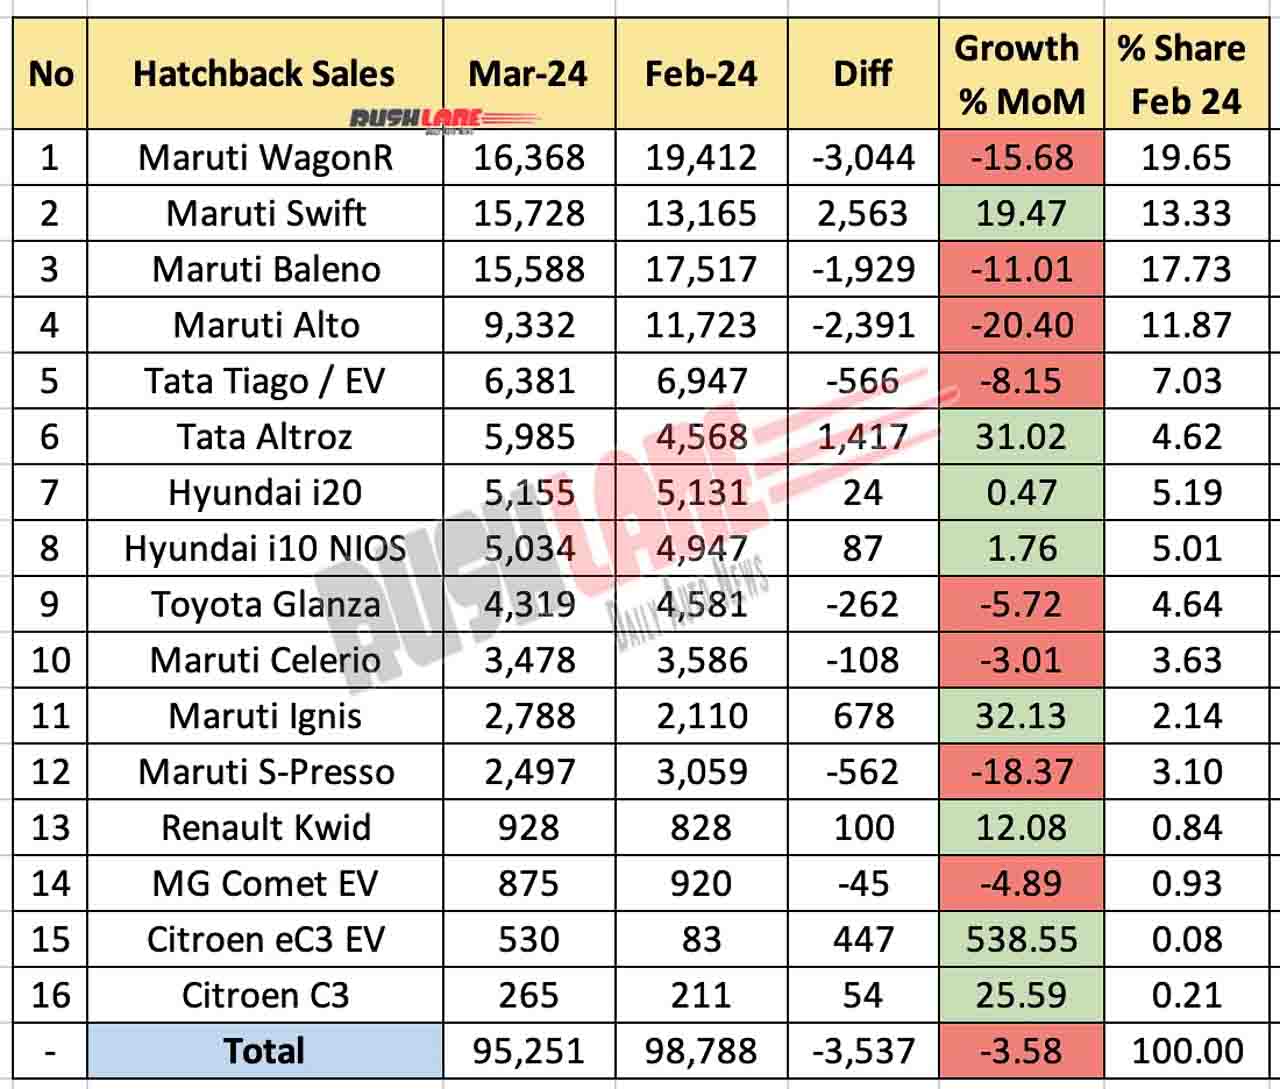 Hatchback Sales March 2024 vs Feb 2024 - MoM Performance